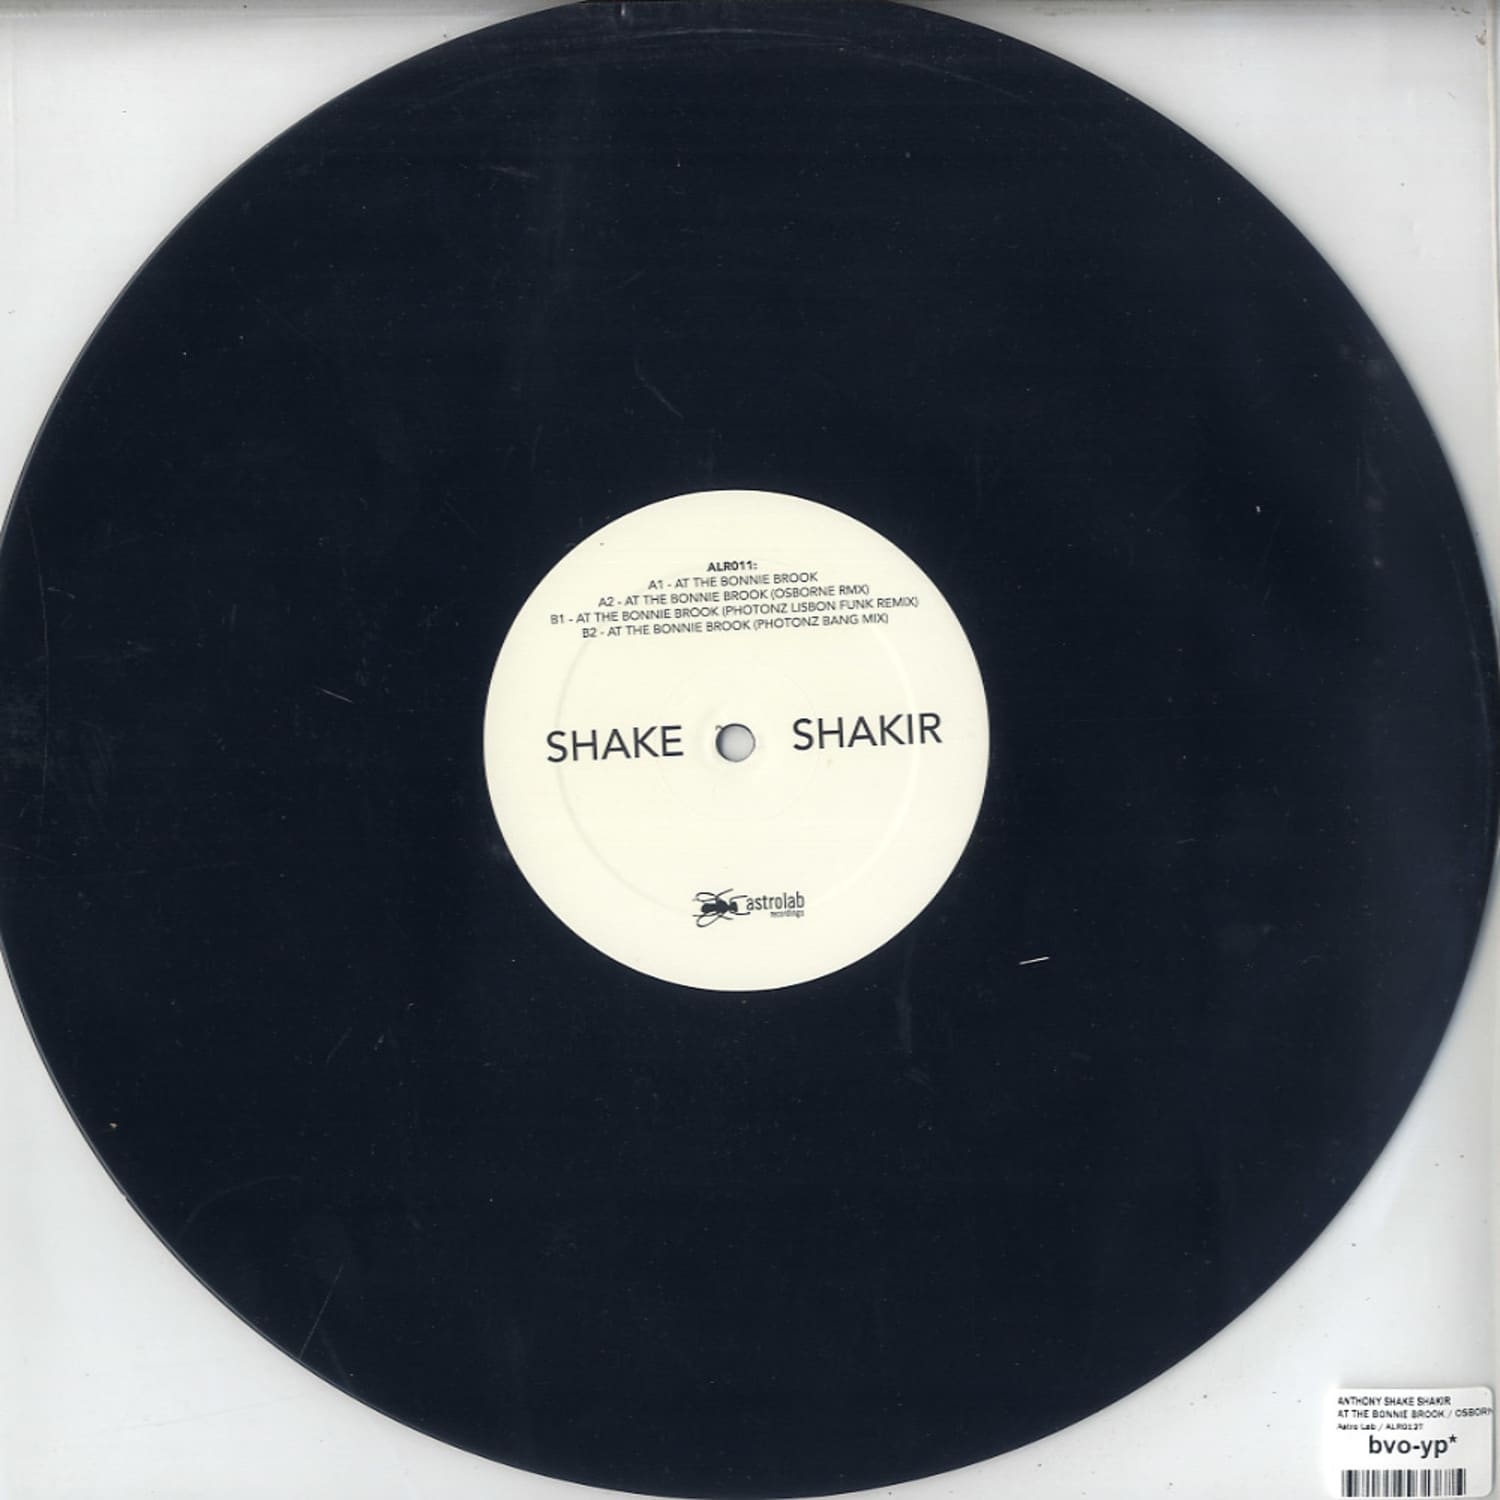 Anthony Shake Shakir - AT THE BONNIE BROOK / OSBORNE RMX